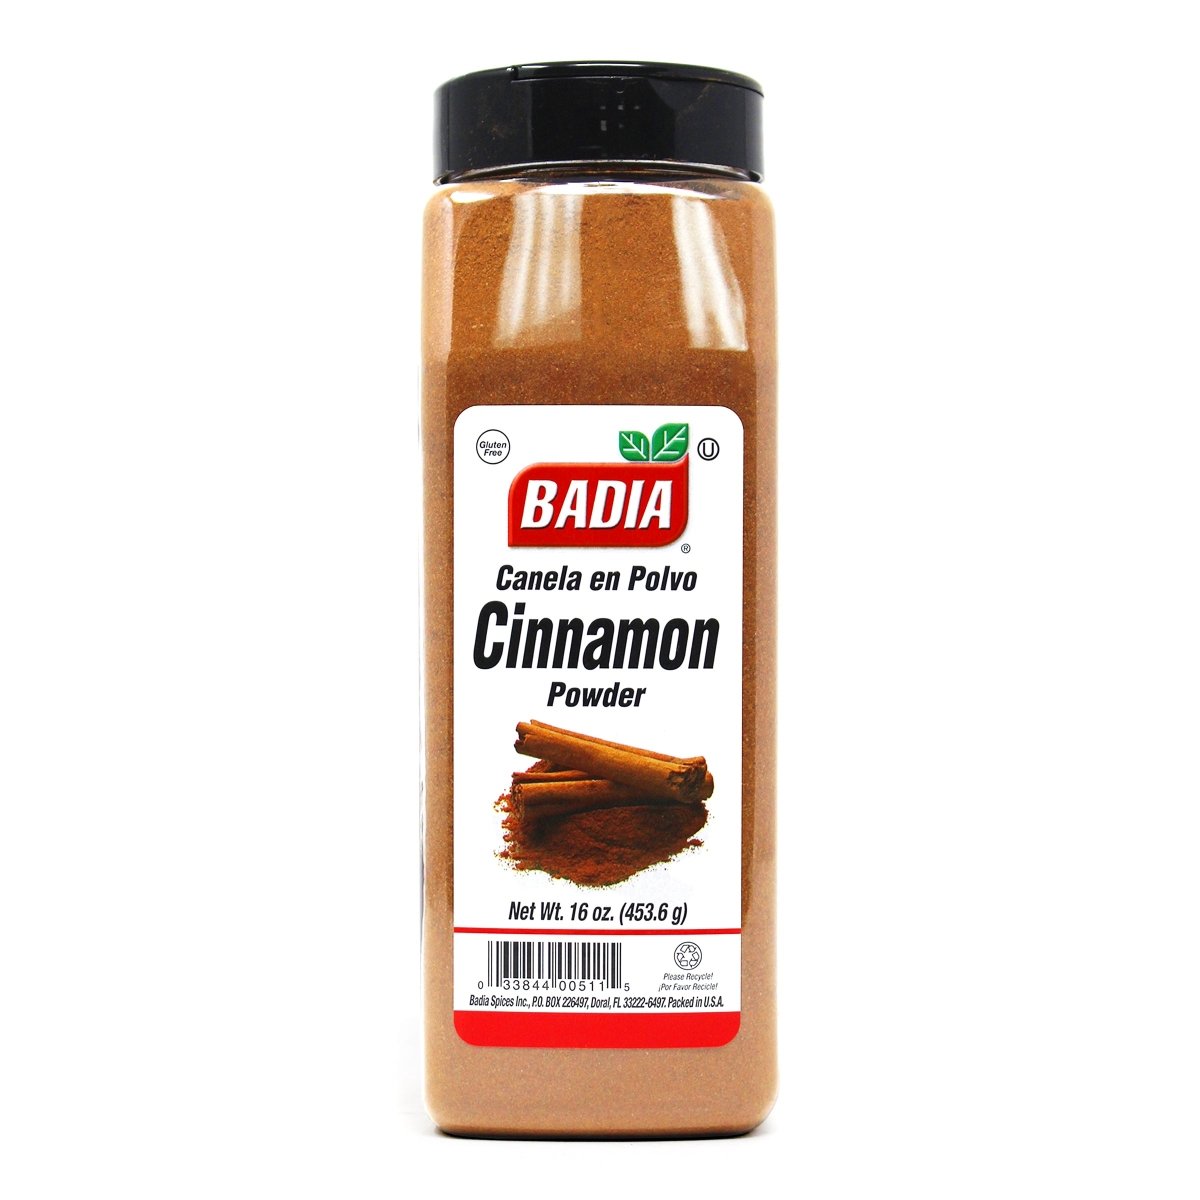 Badia Cinnamon Powder 16oz. 511 - Texas Star Grill Shop 511